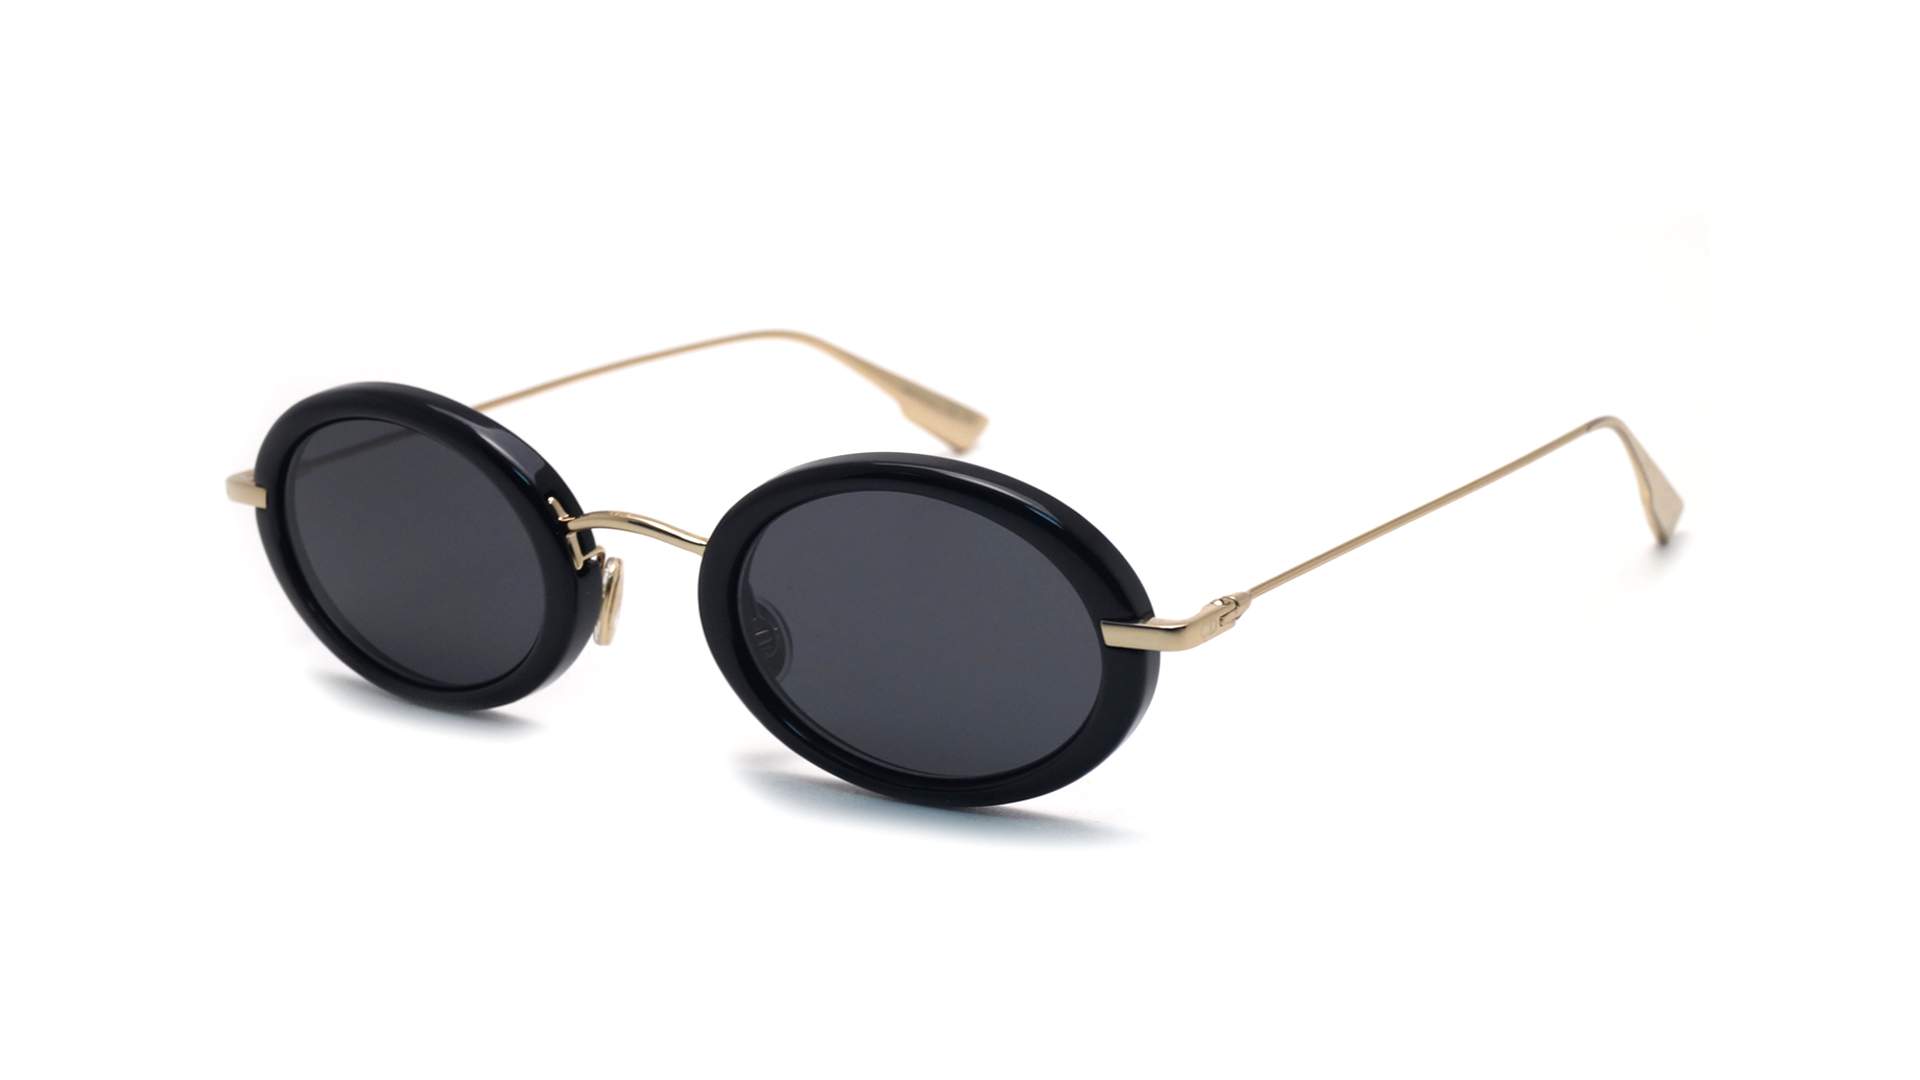 dior sunglasses original price